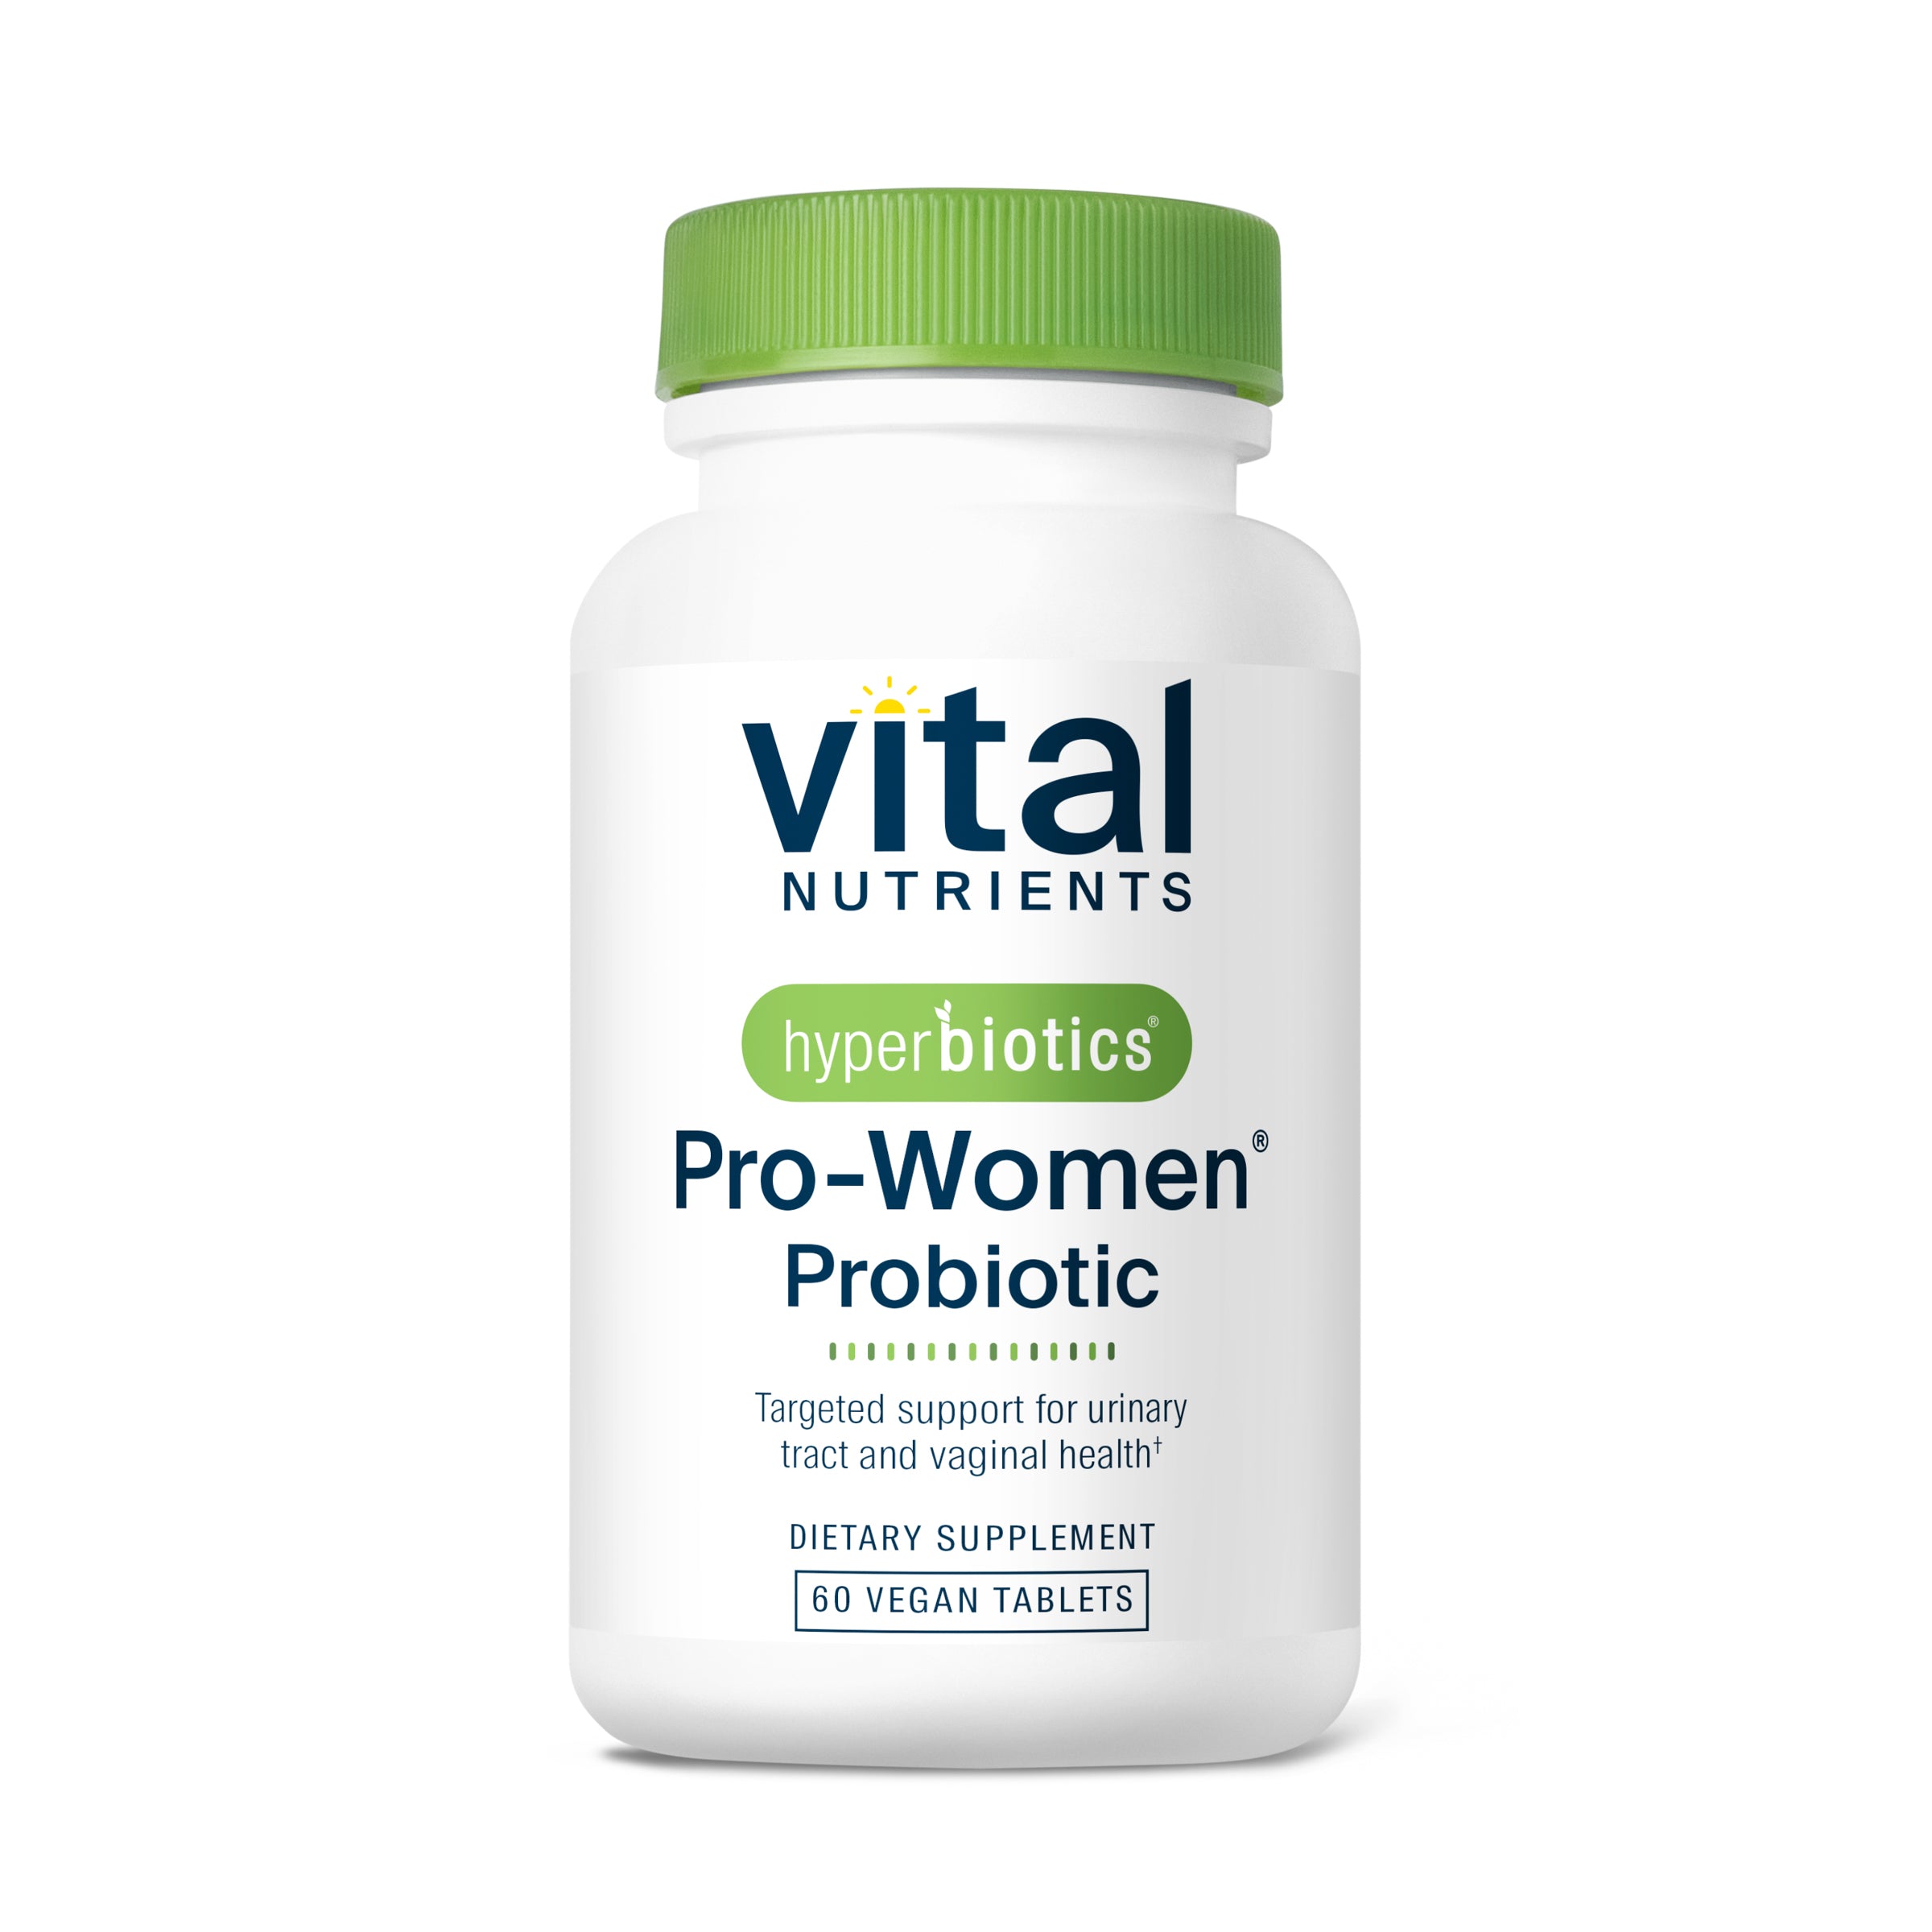 Hyperbiotics Pro-Women Probiotic 60 vegan tablets.